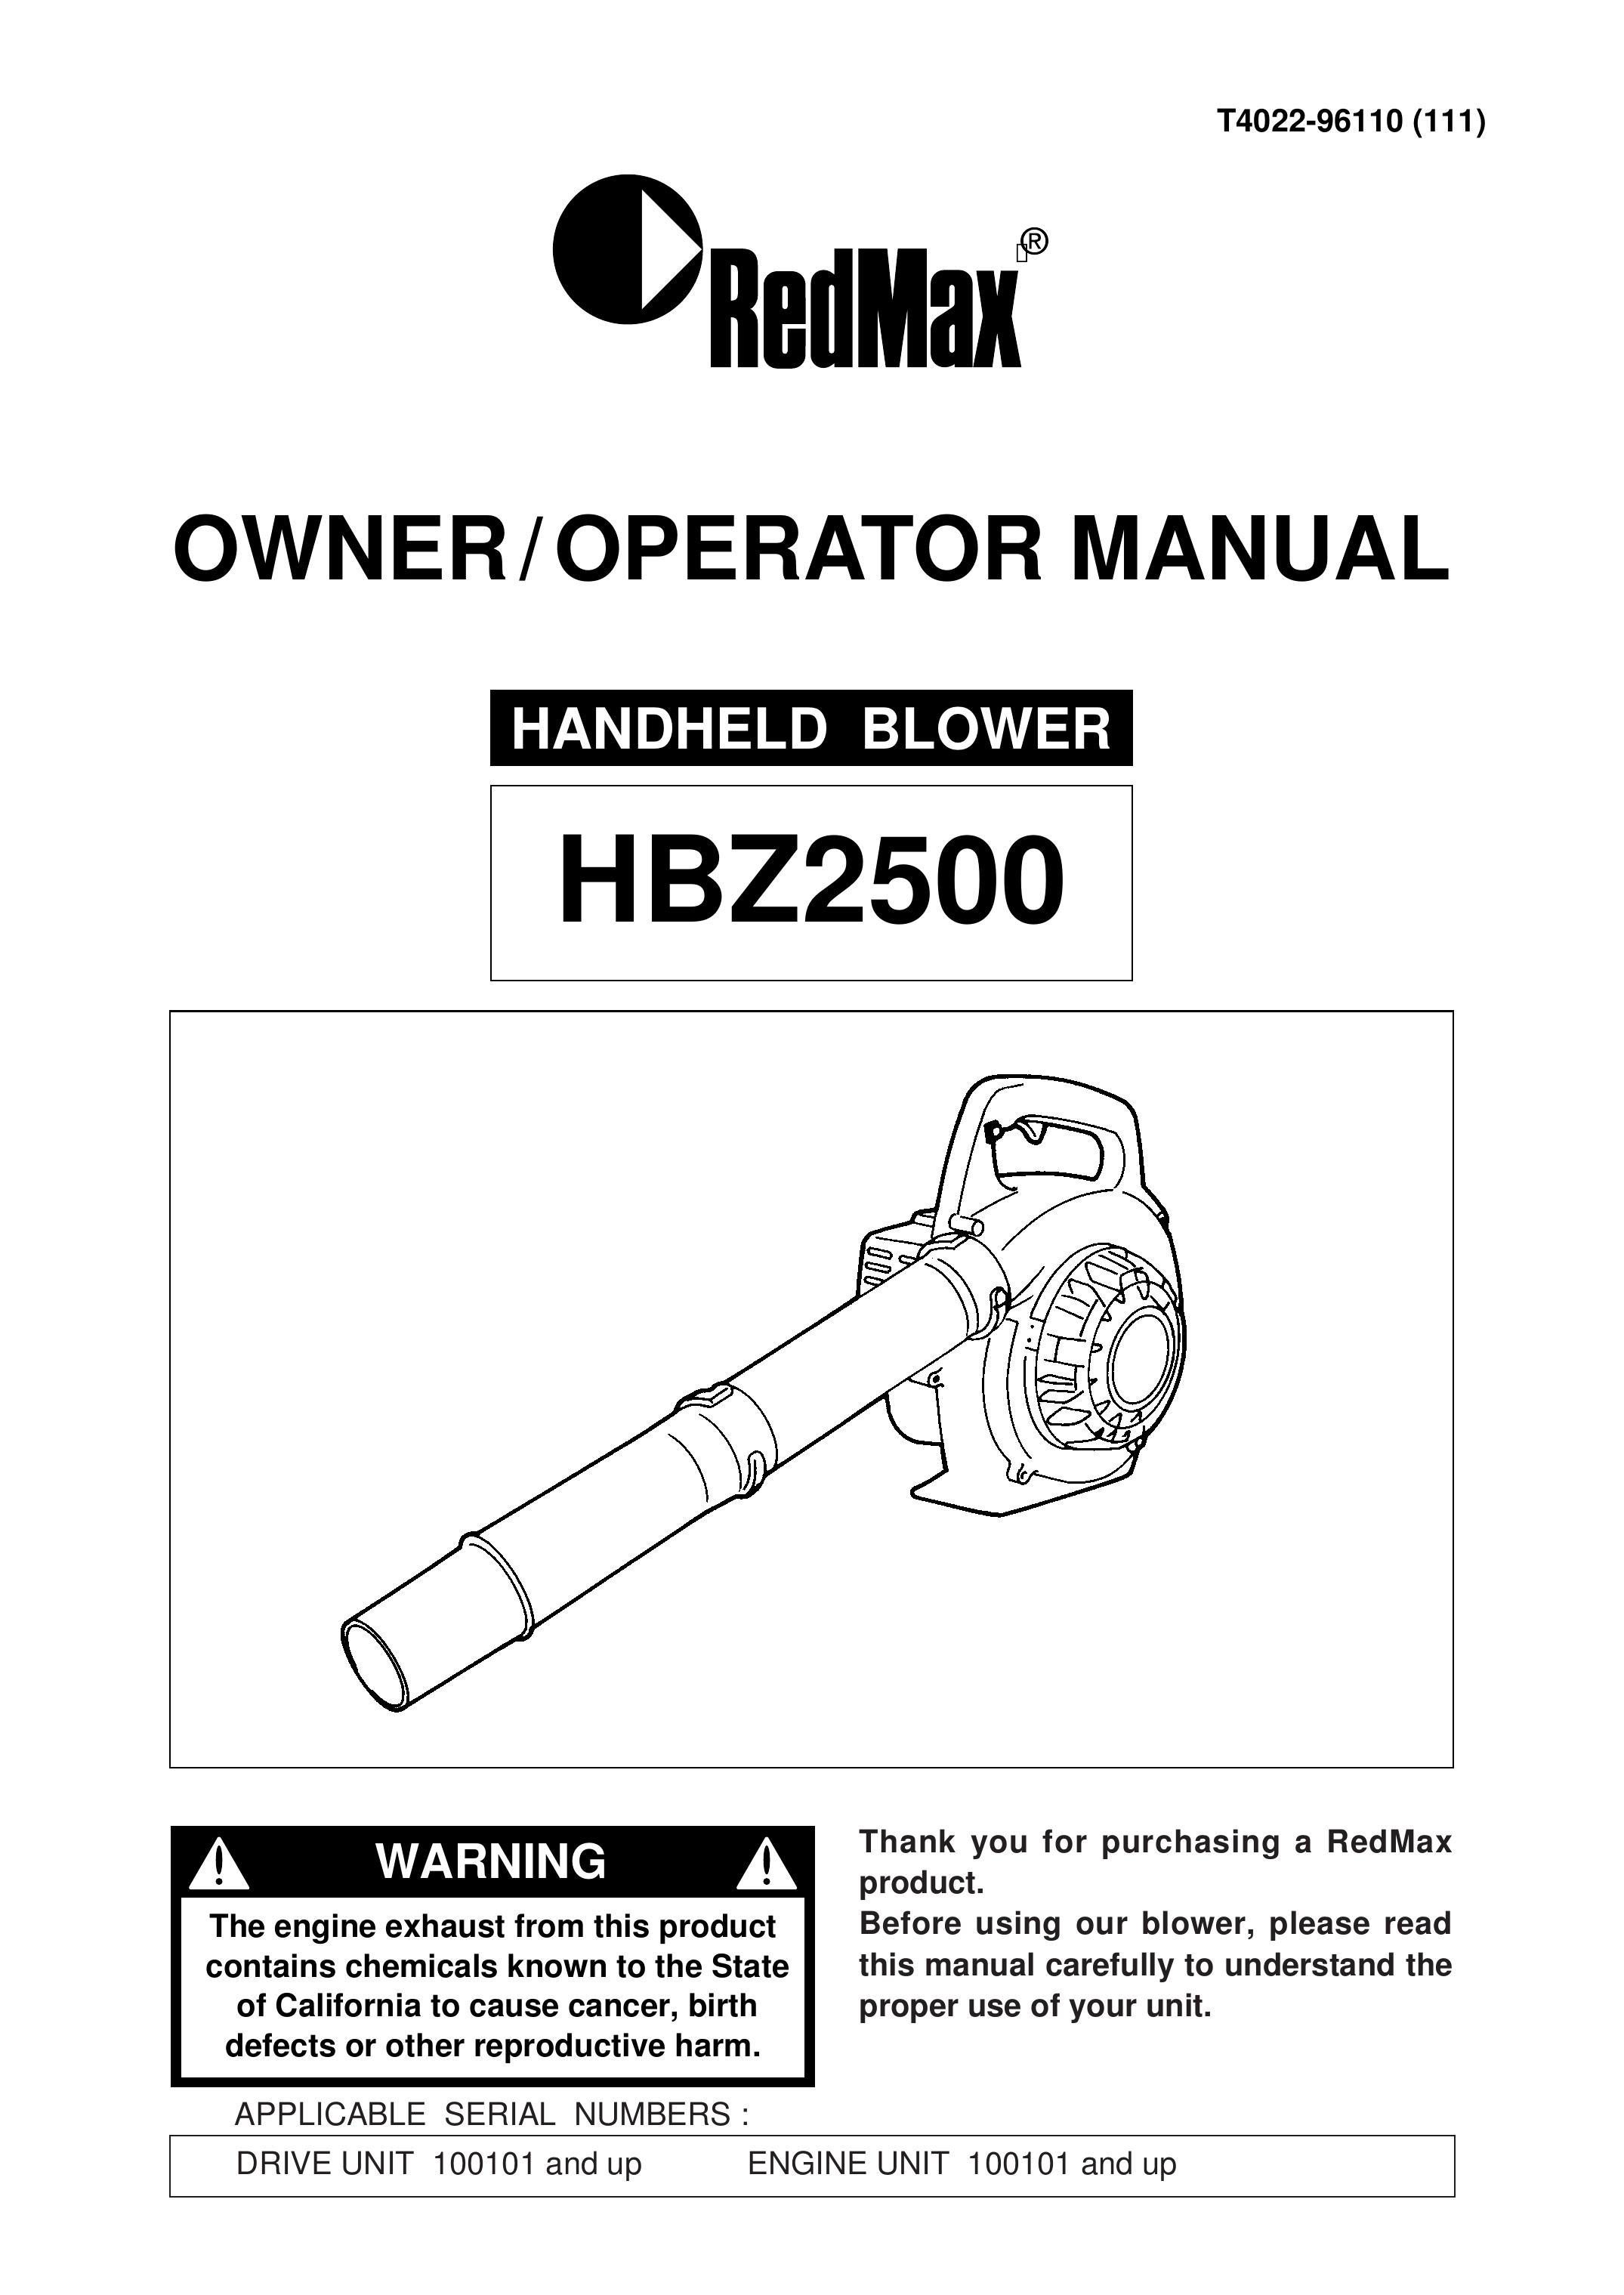 RedMax HBZ2500 Blower User Manual